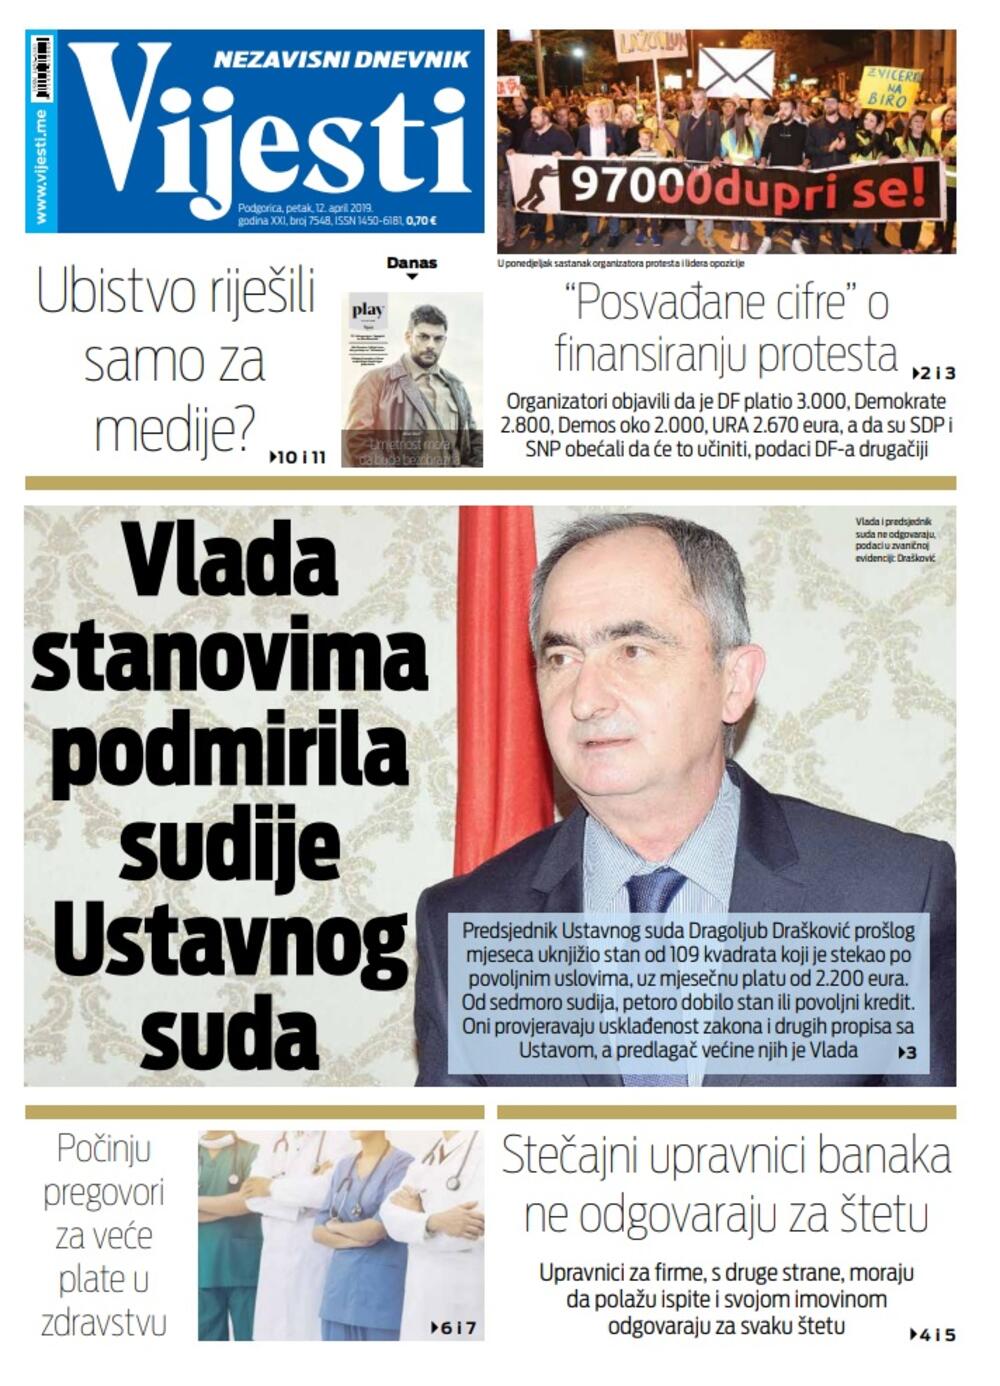 Naslovna strana "Vijesti" za 12. april